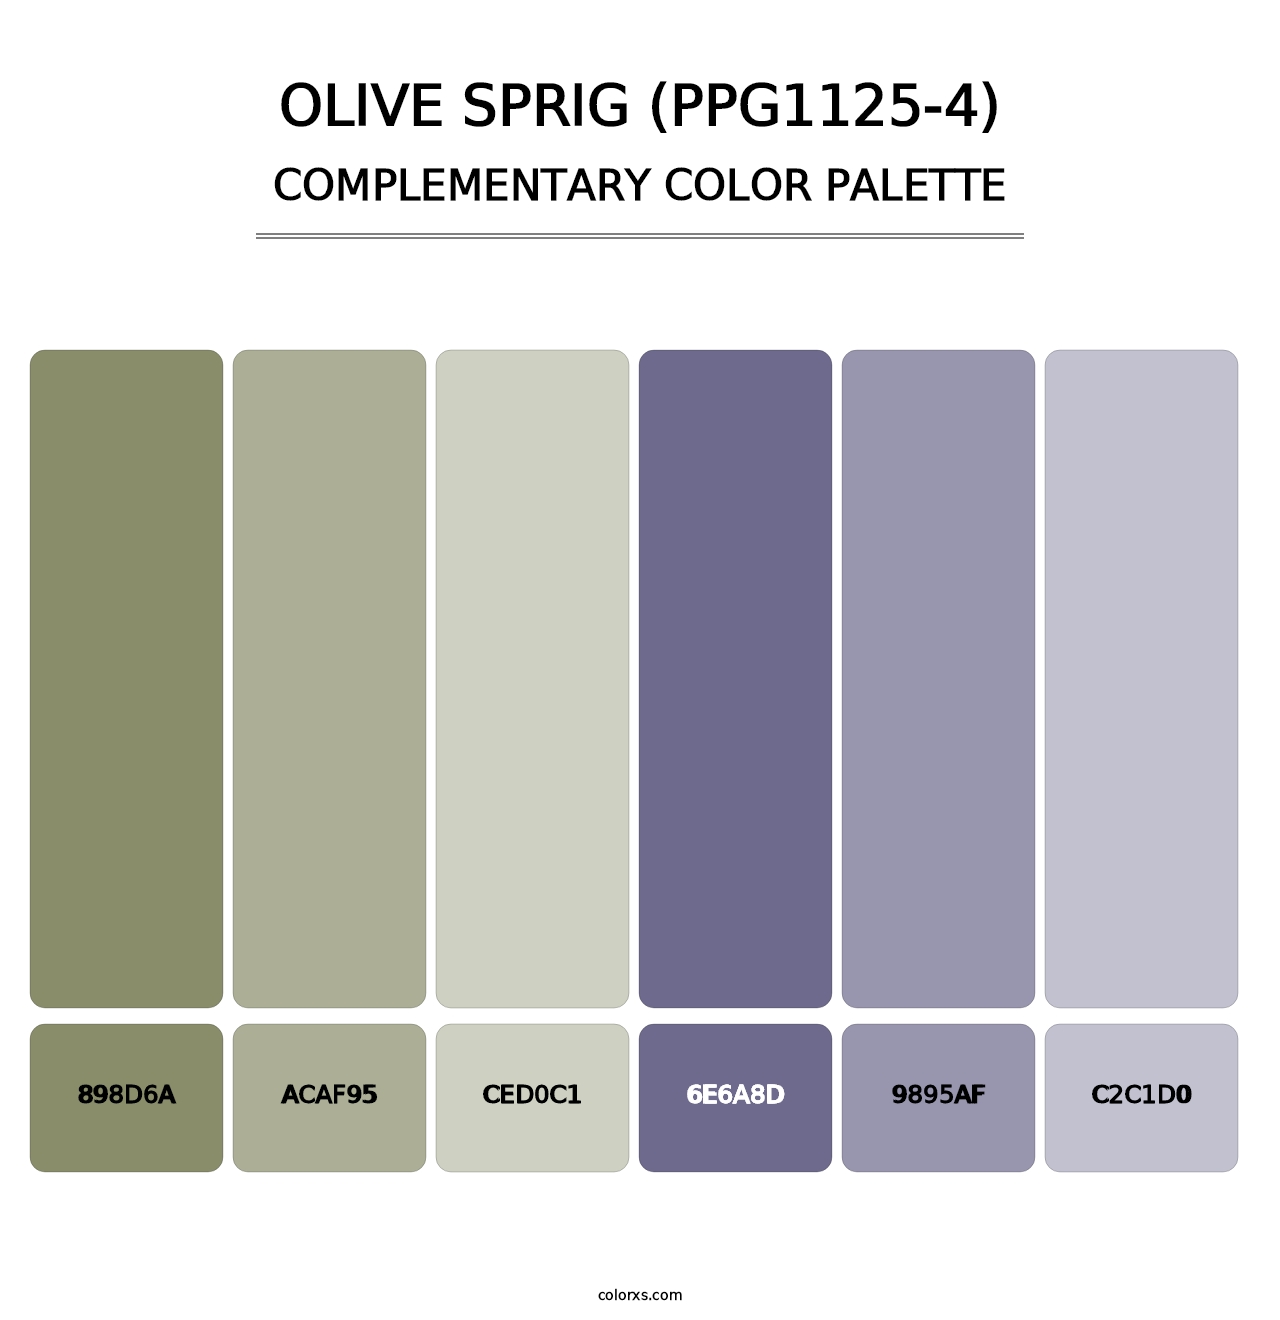 Olive Sprig (PPG1125-4) - Complementary Color Palette